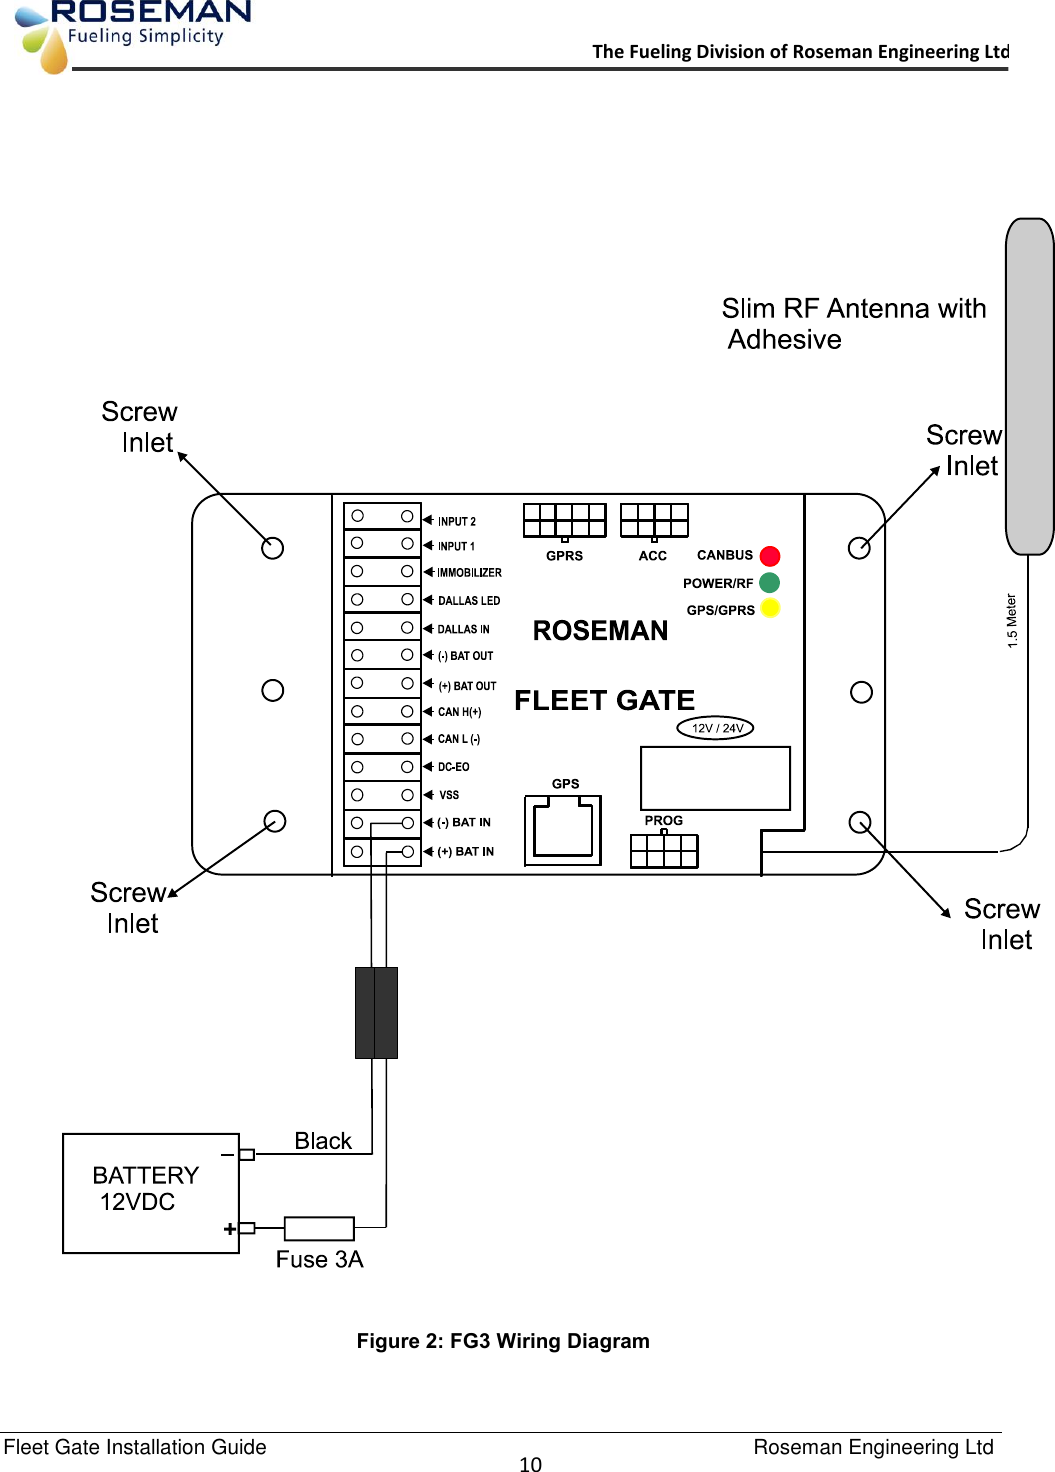   Fleet Gate Installation Guide                                                                                    Roseman Engineering Ltd  10      The Fueling Division of Roseman Engineering Ltd.                                                                      Figure 2: FG3 Wiring Diagram  